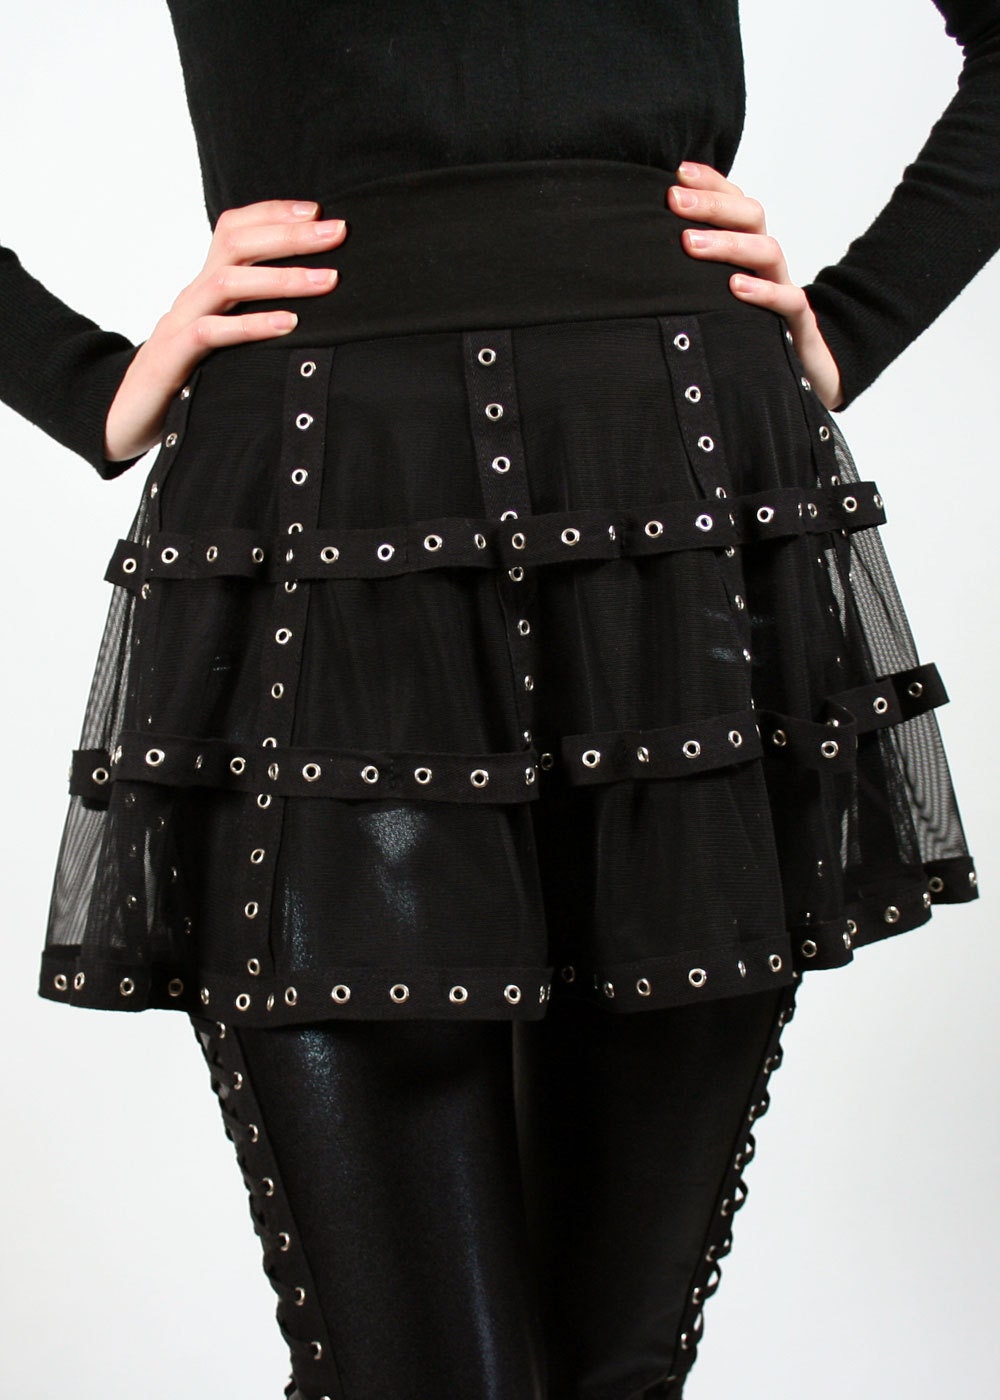 Black Mesh and Grommet Cage Skirt XS S M L XL 2XL 3xl Plus | Etsy